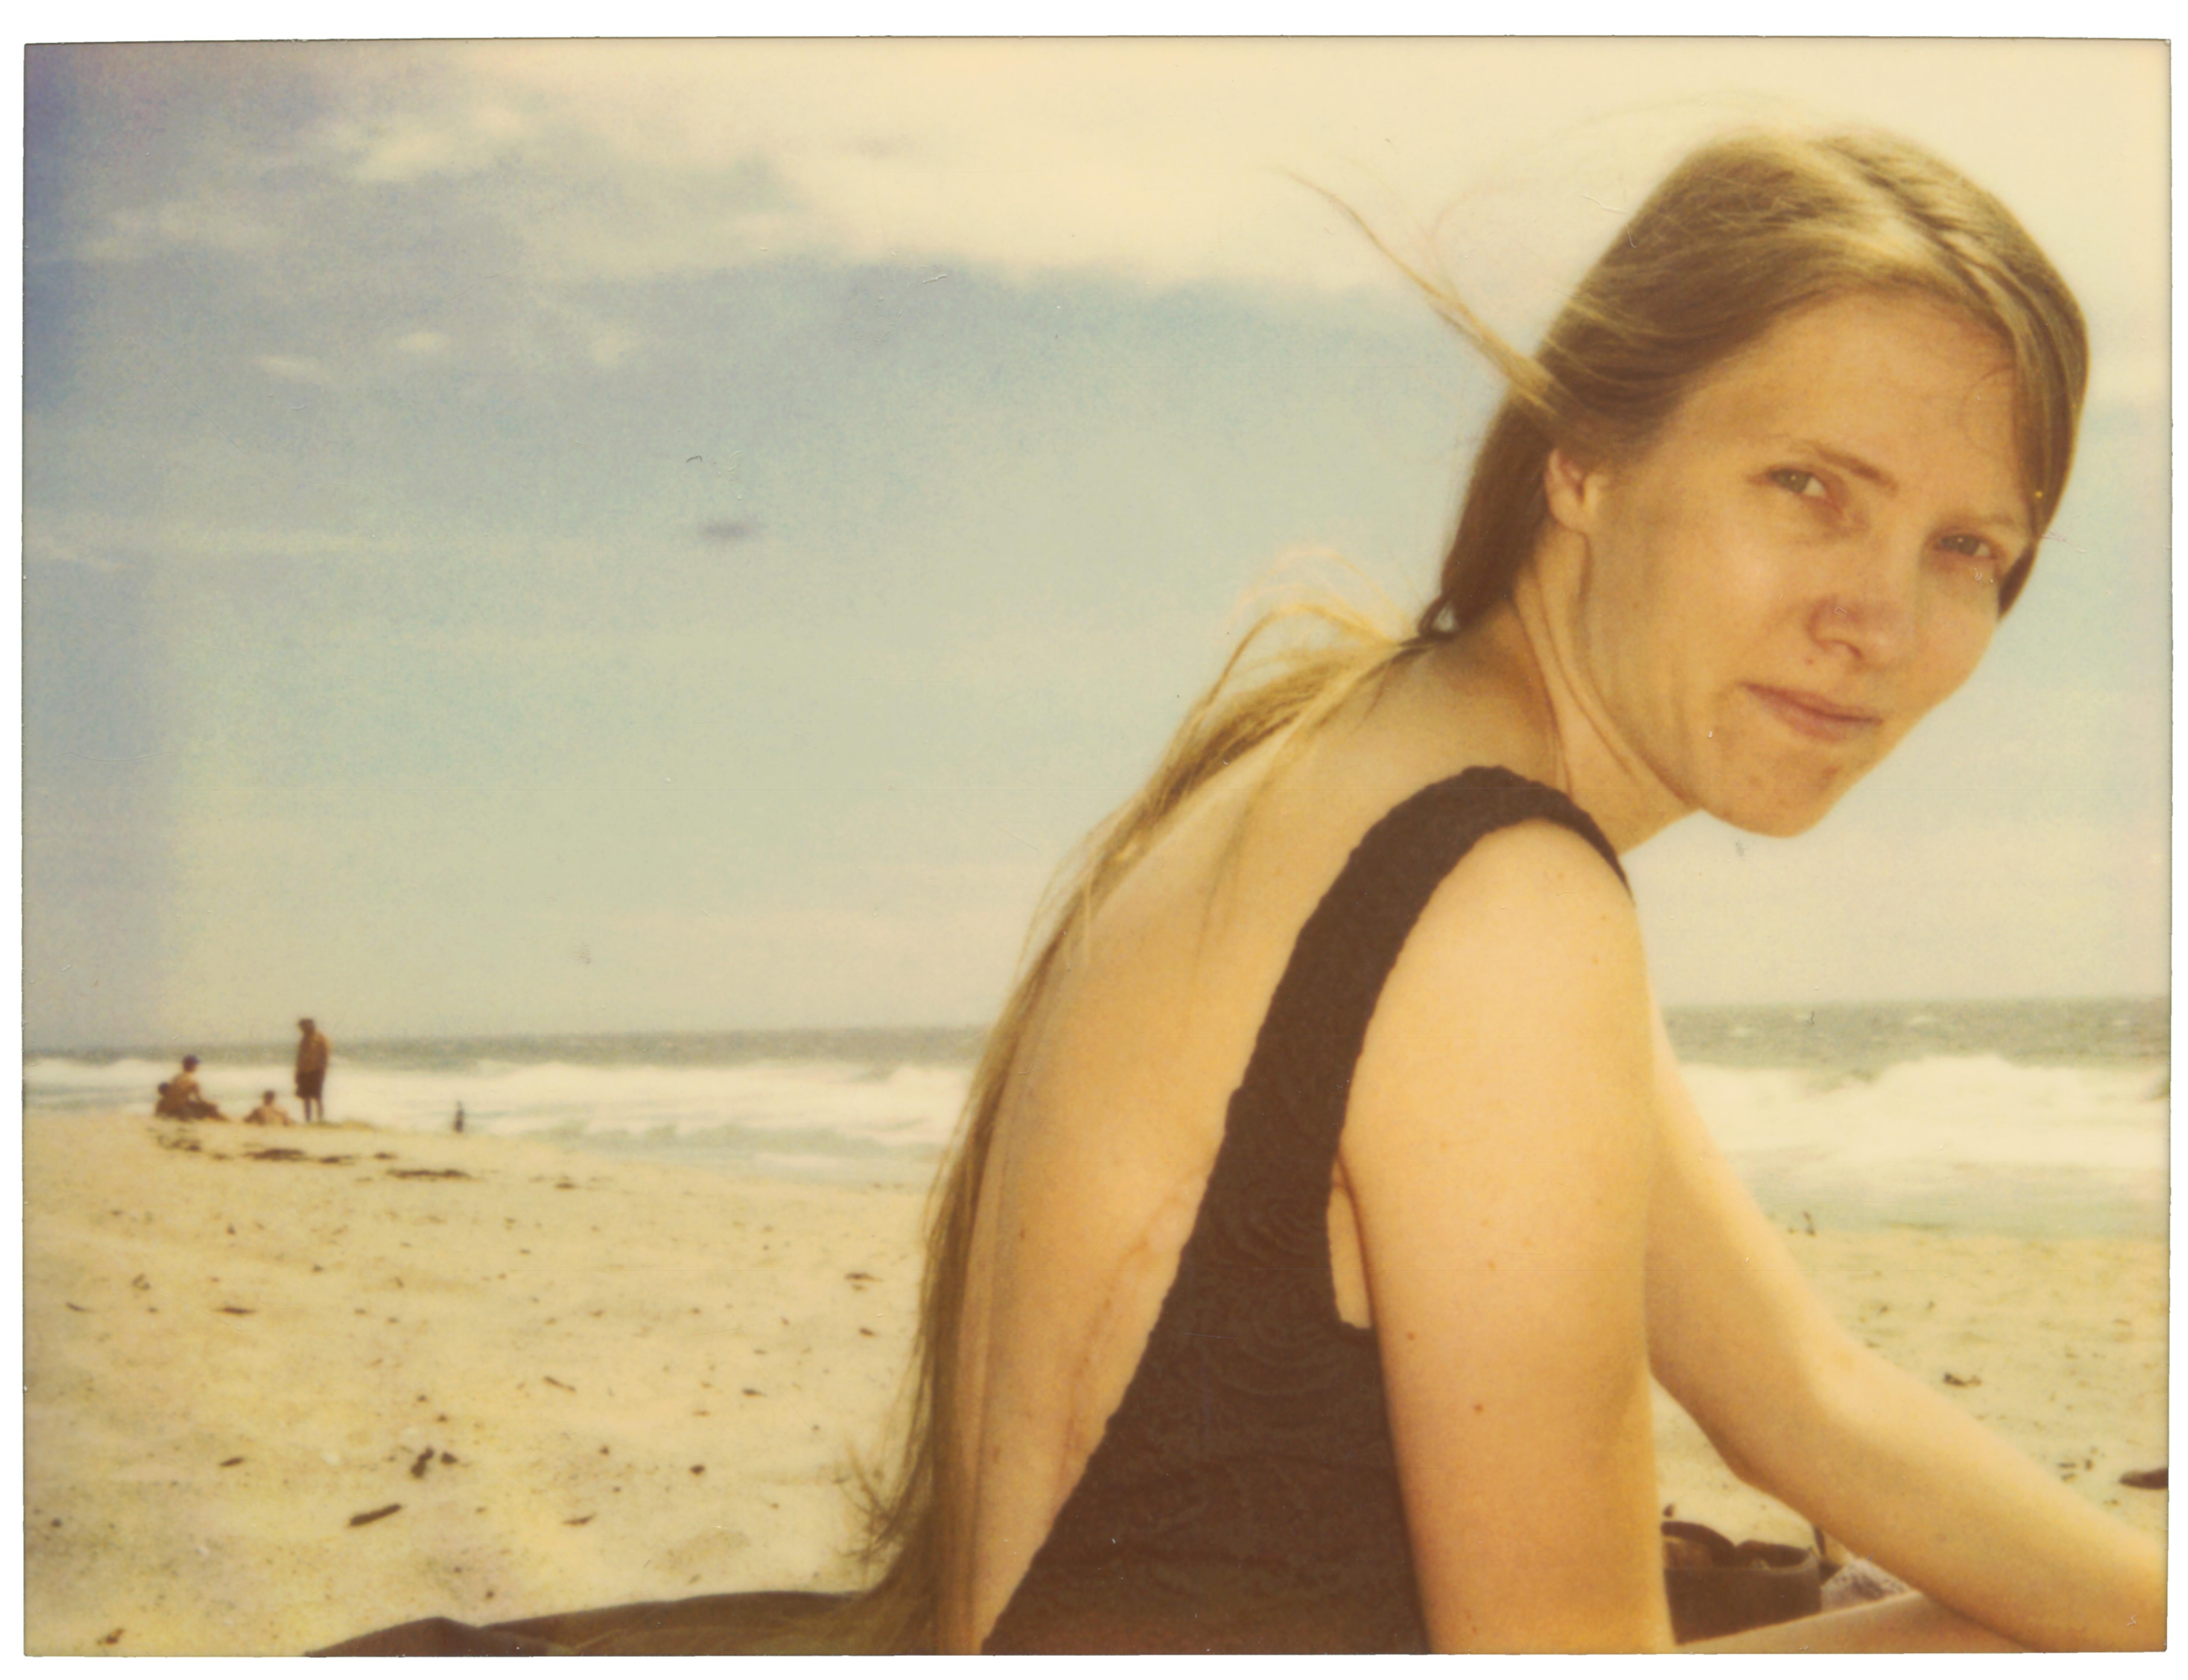 Portrait Photograph Stefanie Schneider - Briser les vagues (Zuma Beach)